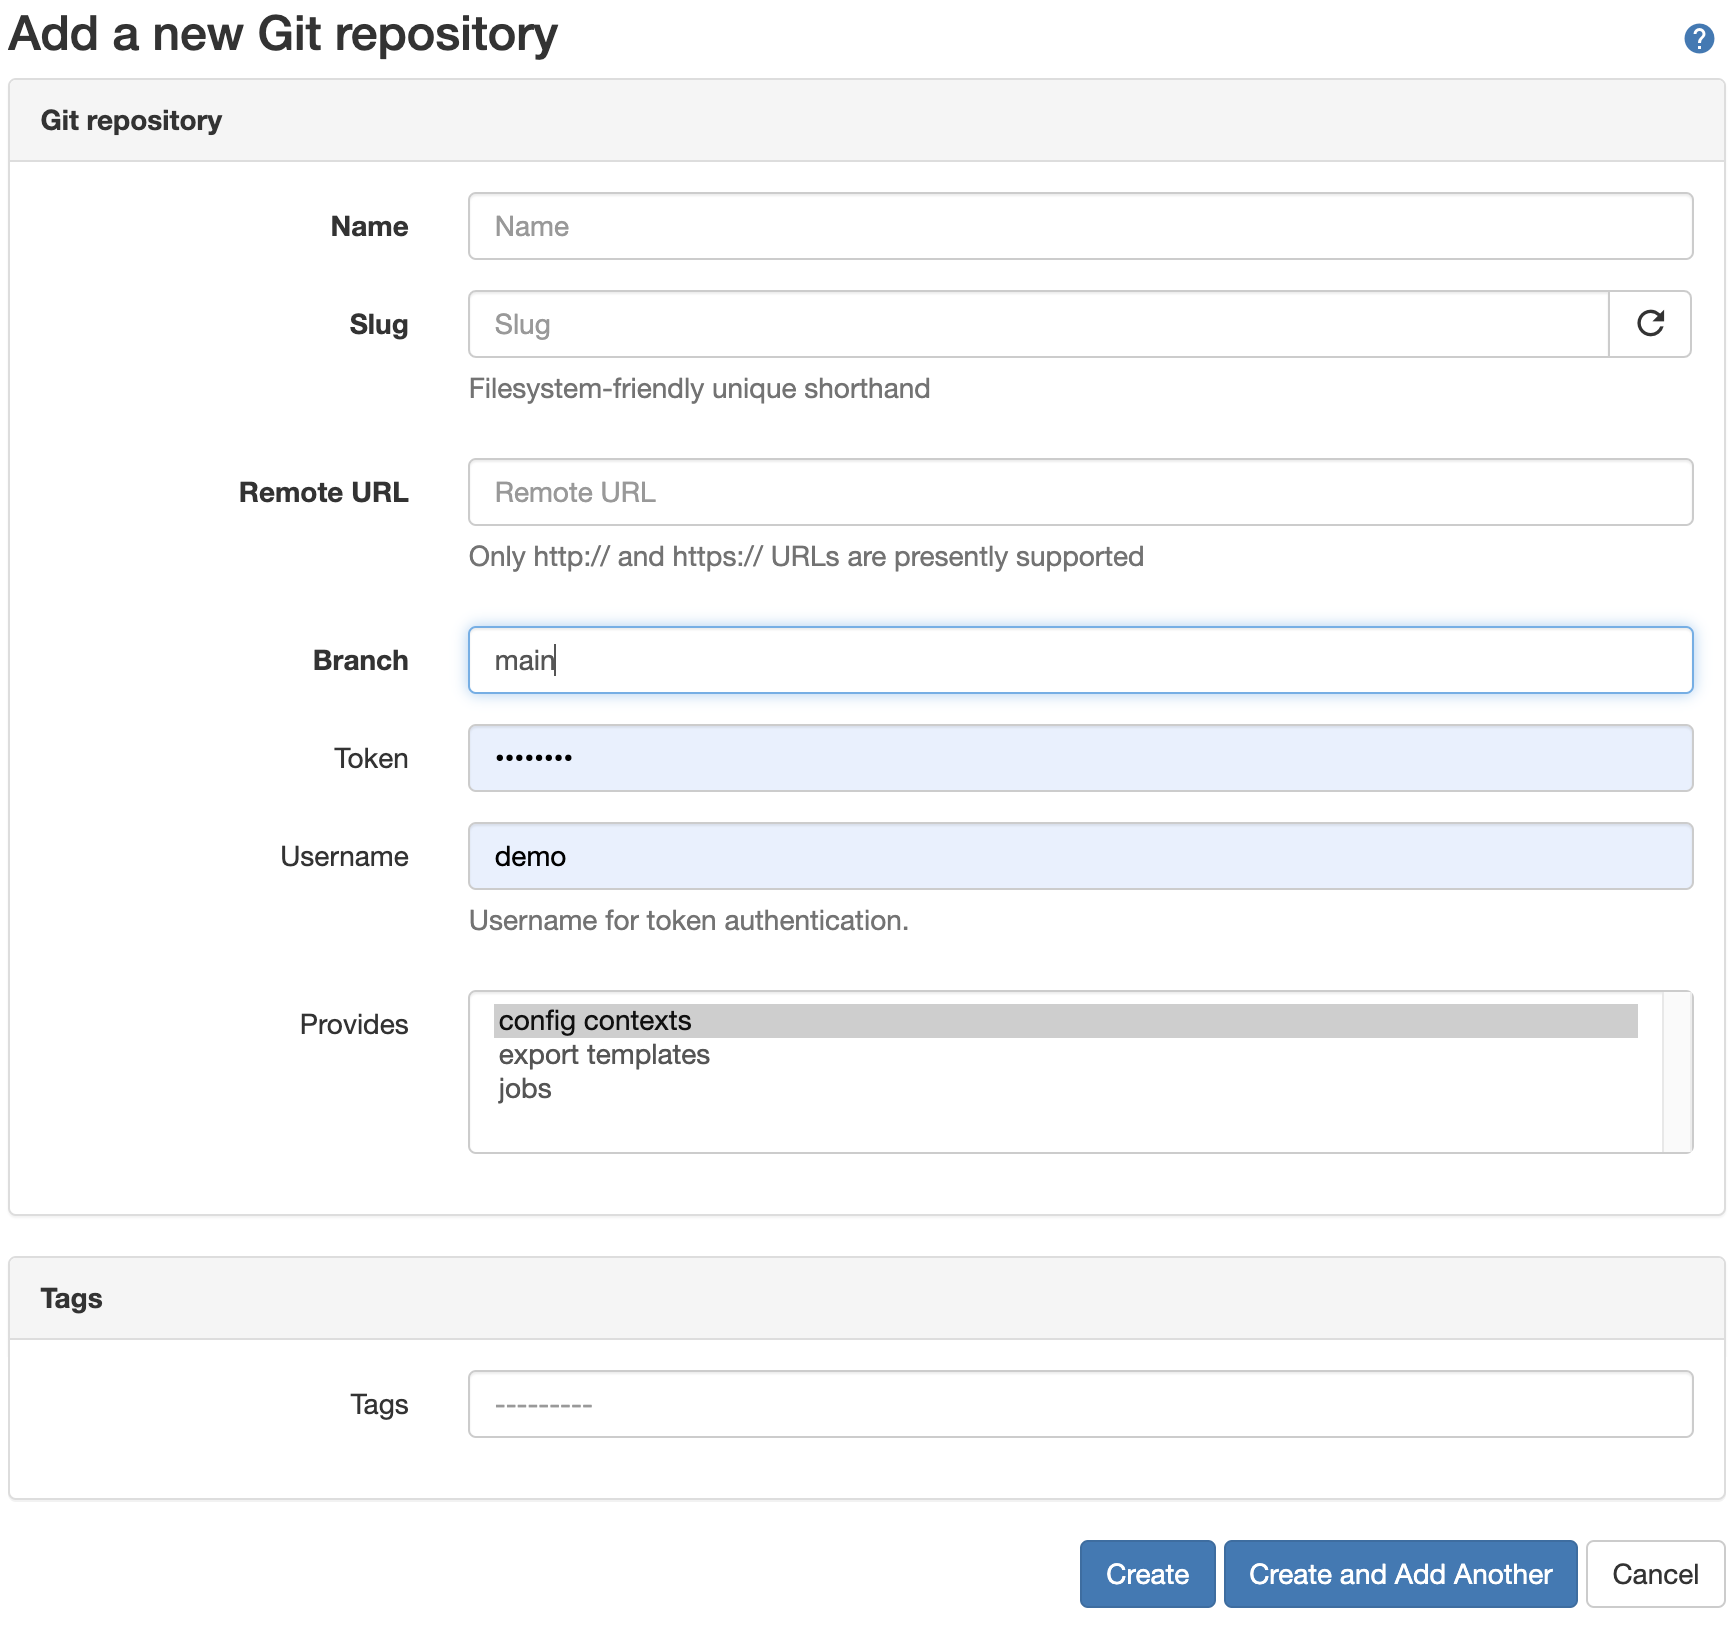 Add a New Git Repository